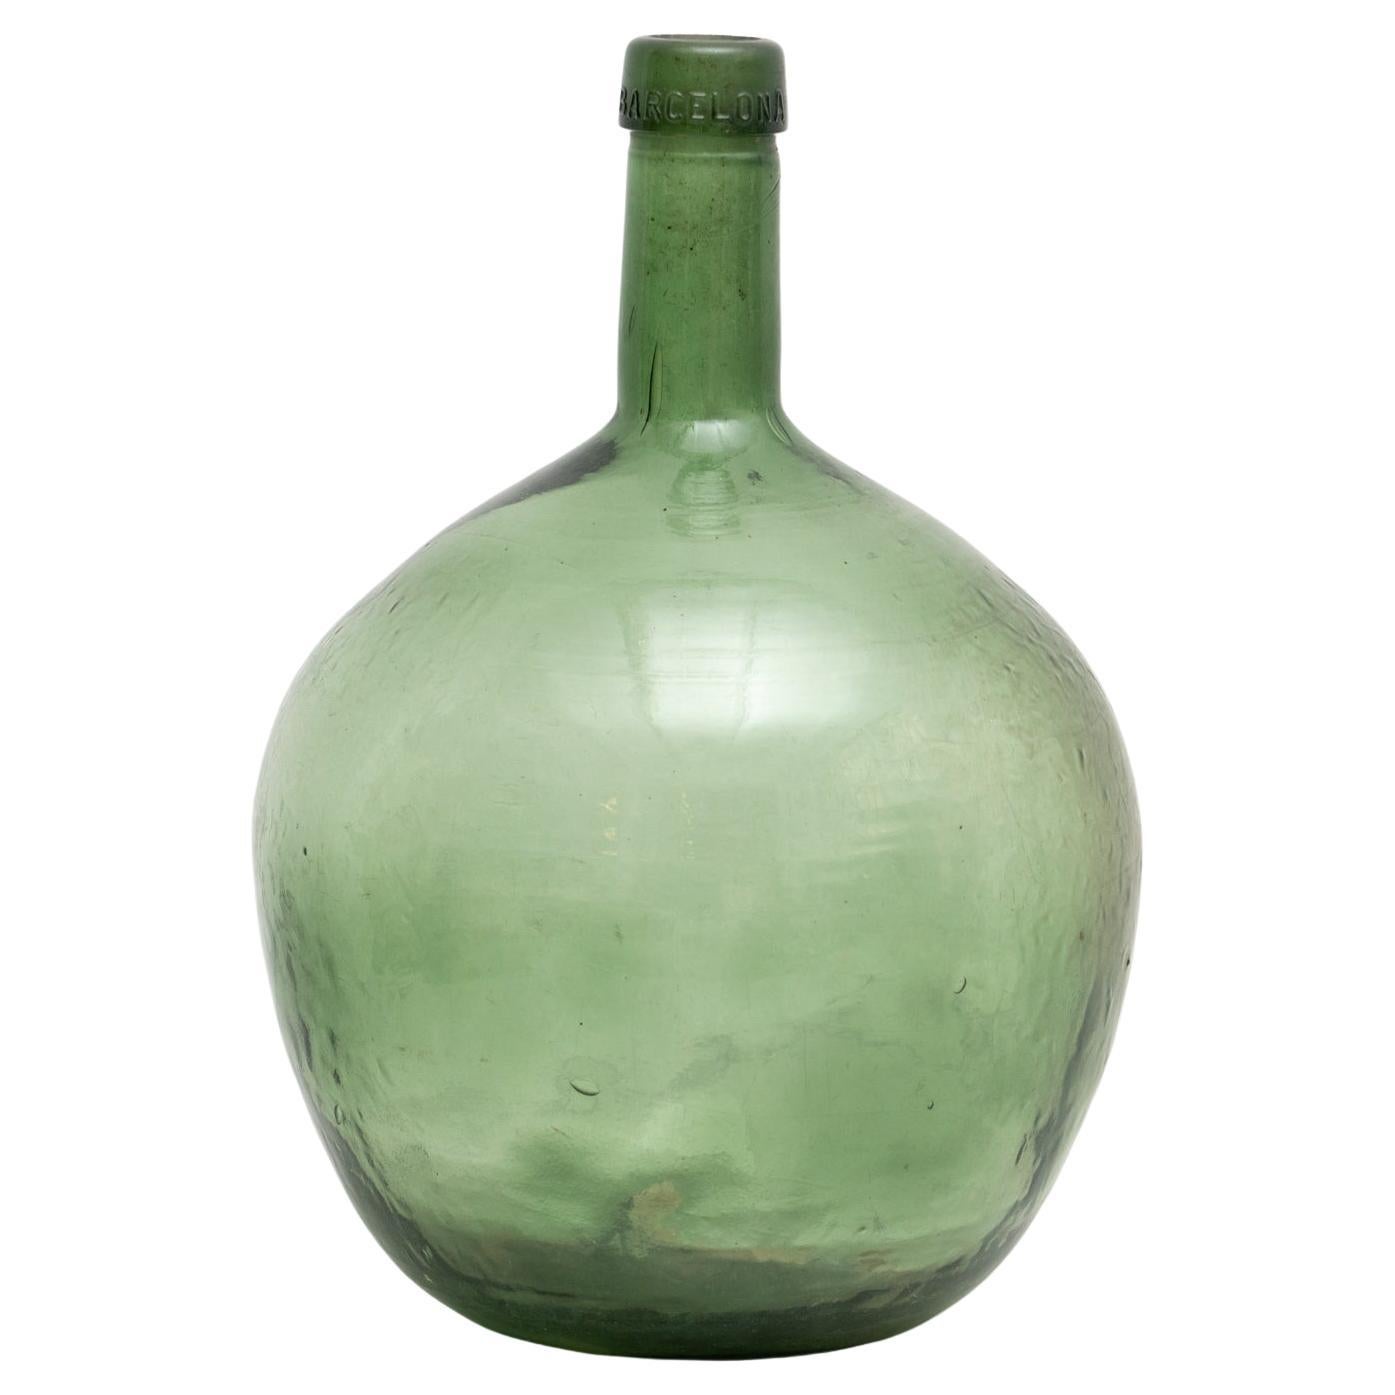 Antique French Demijohn Glass Bottle from Barcelona circa 1950